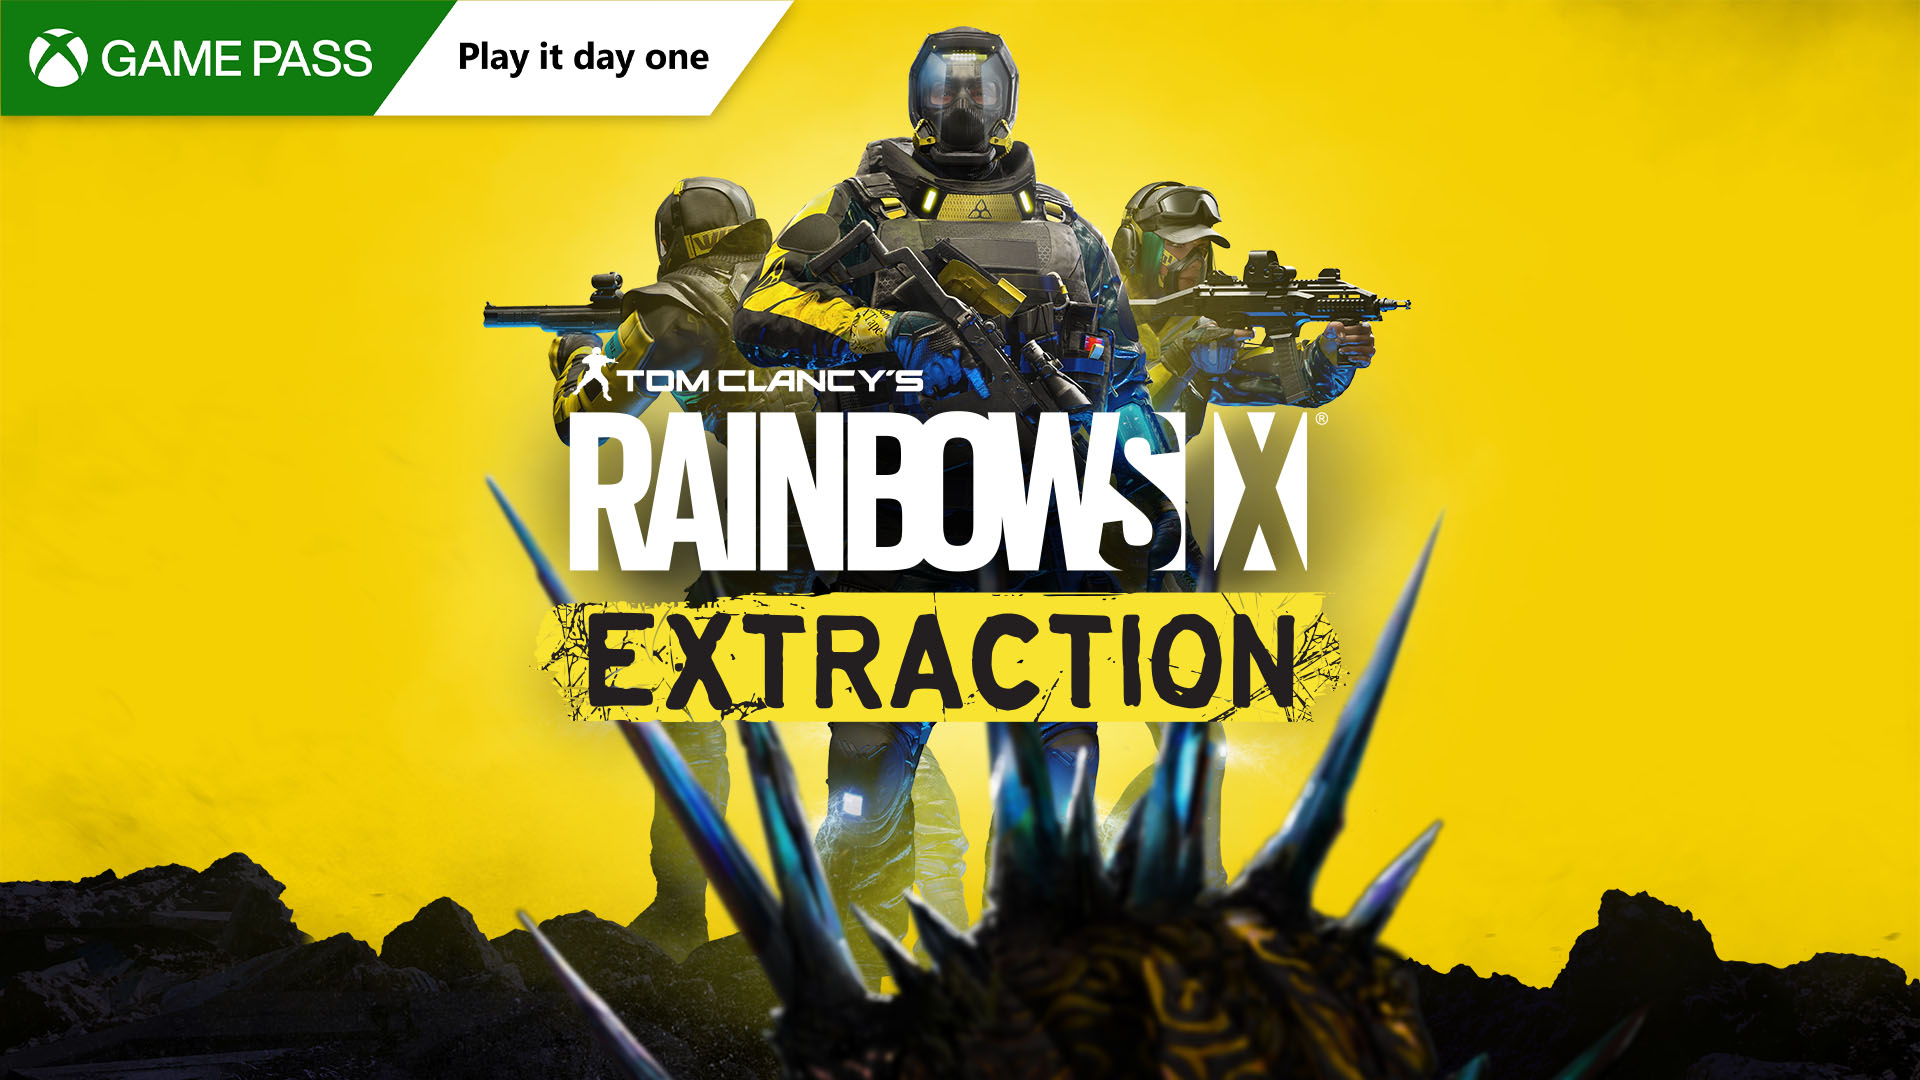 Rainbow Six: Extraction gratuito nas consolas e PC